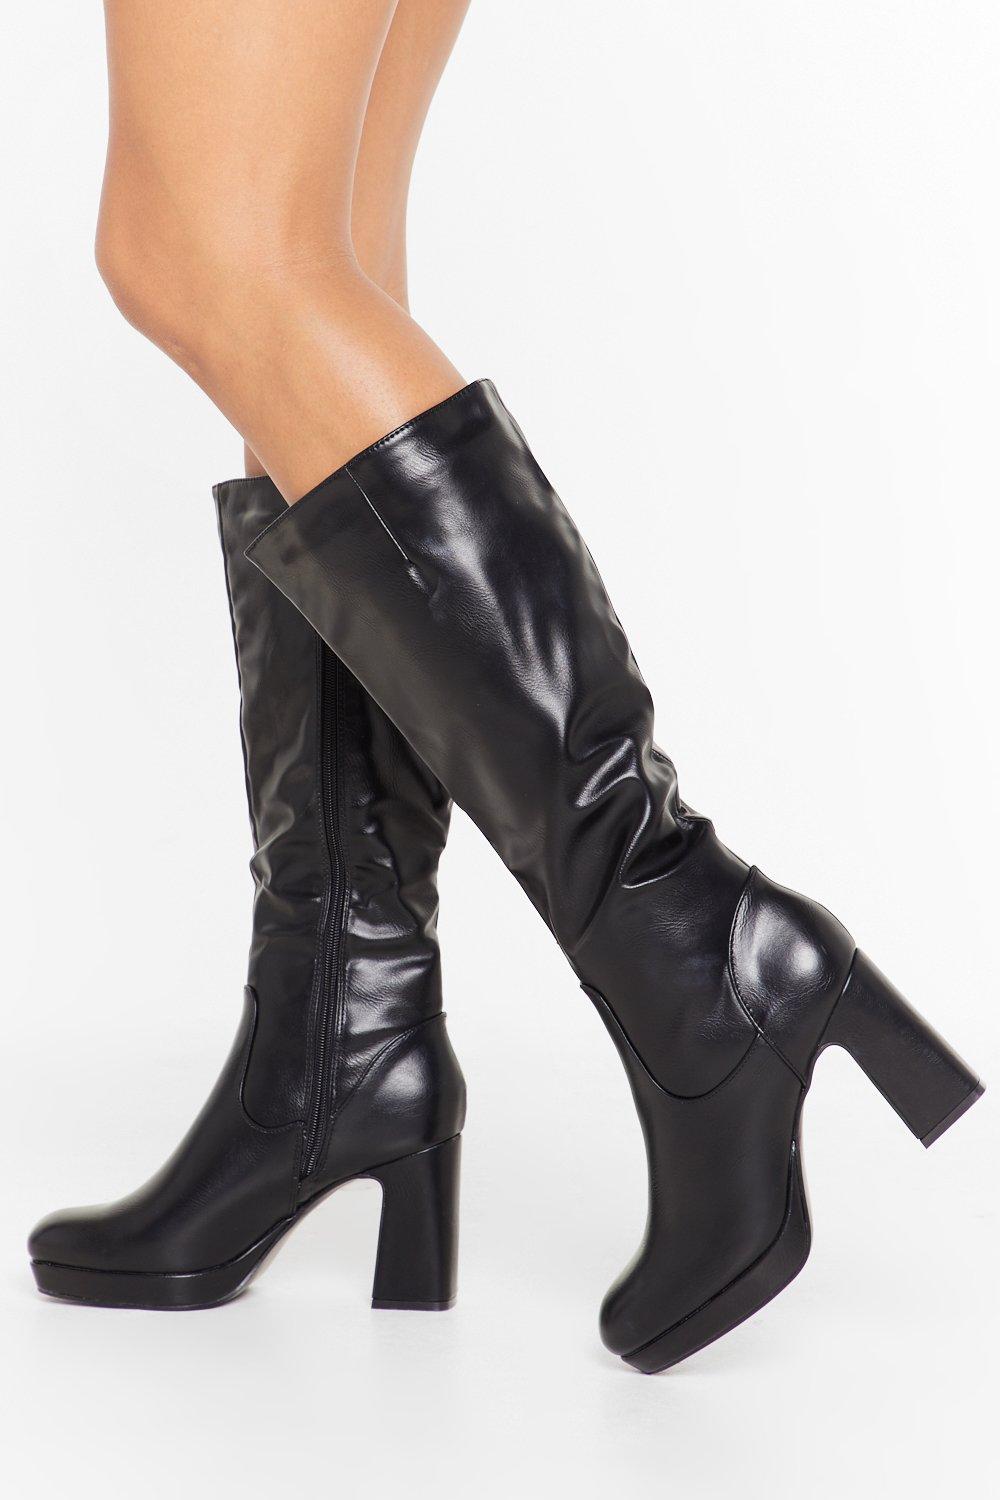 knee high leather boots heel